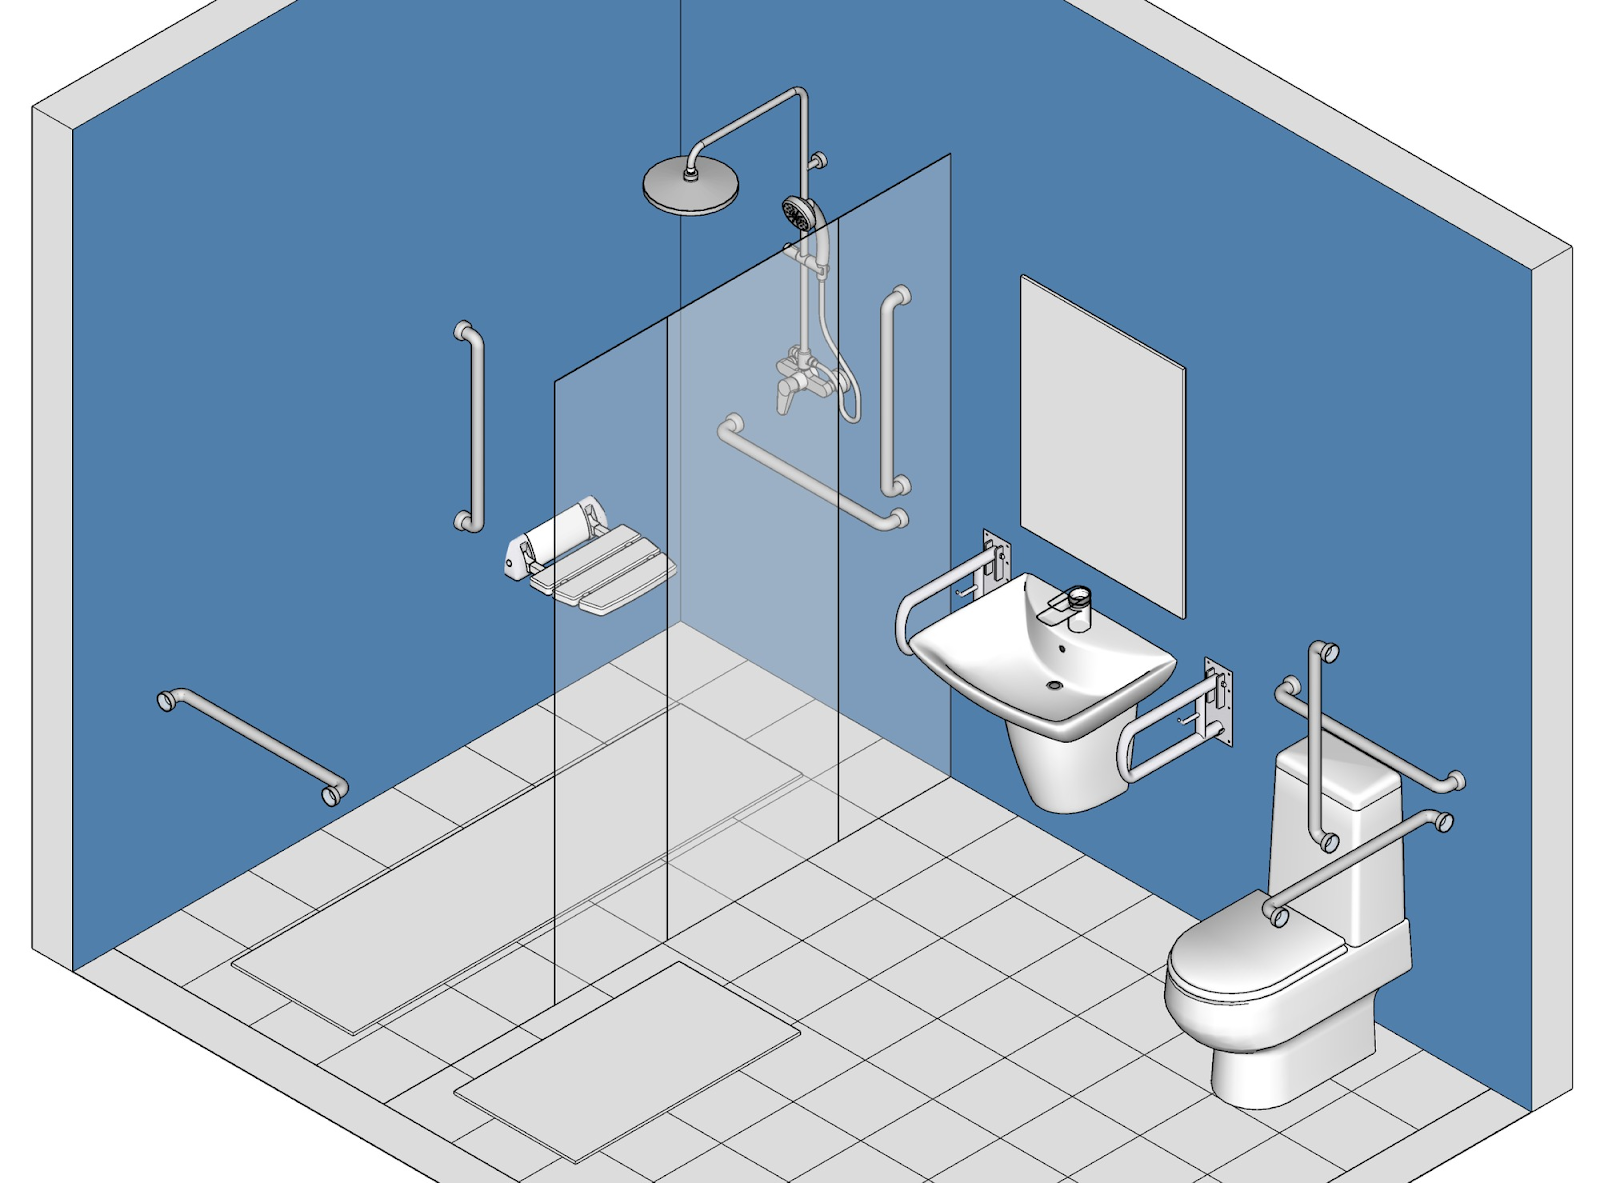 Basic disabled bathroom design